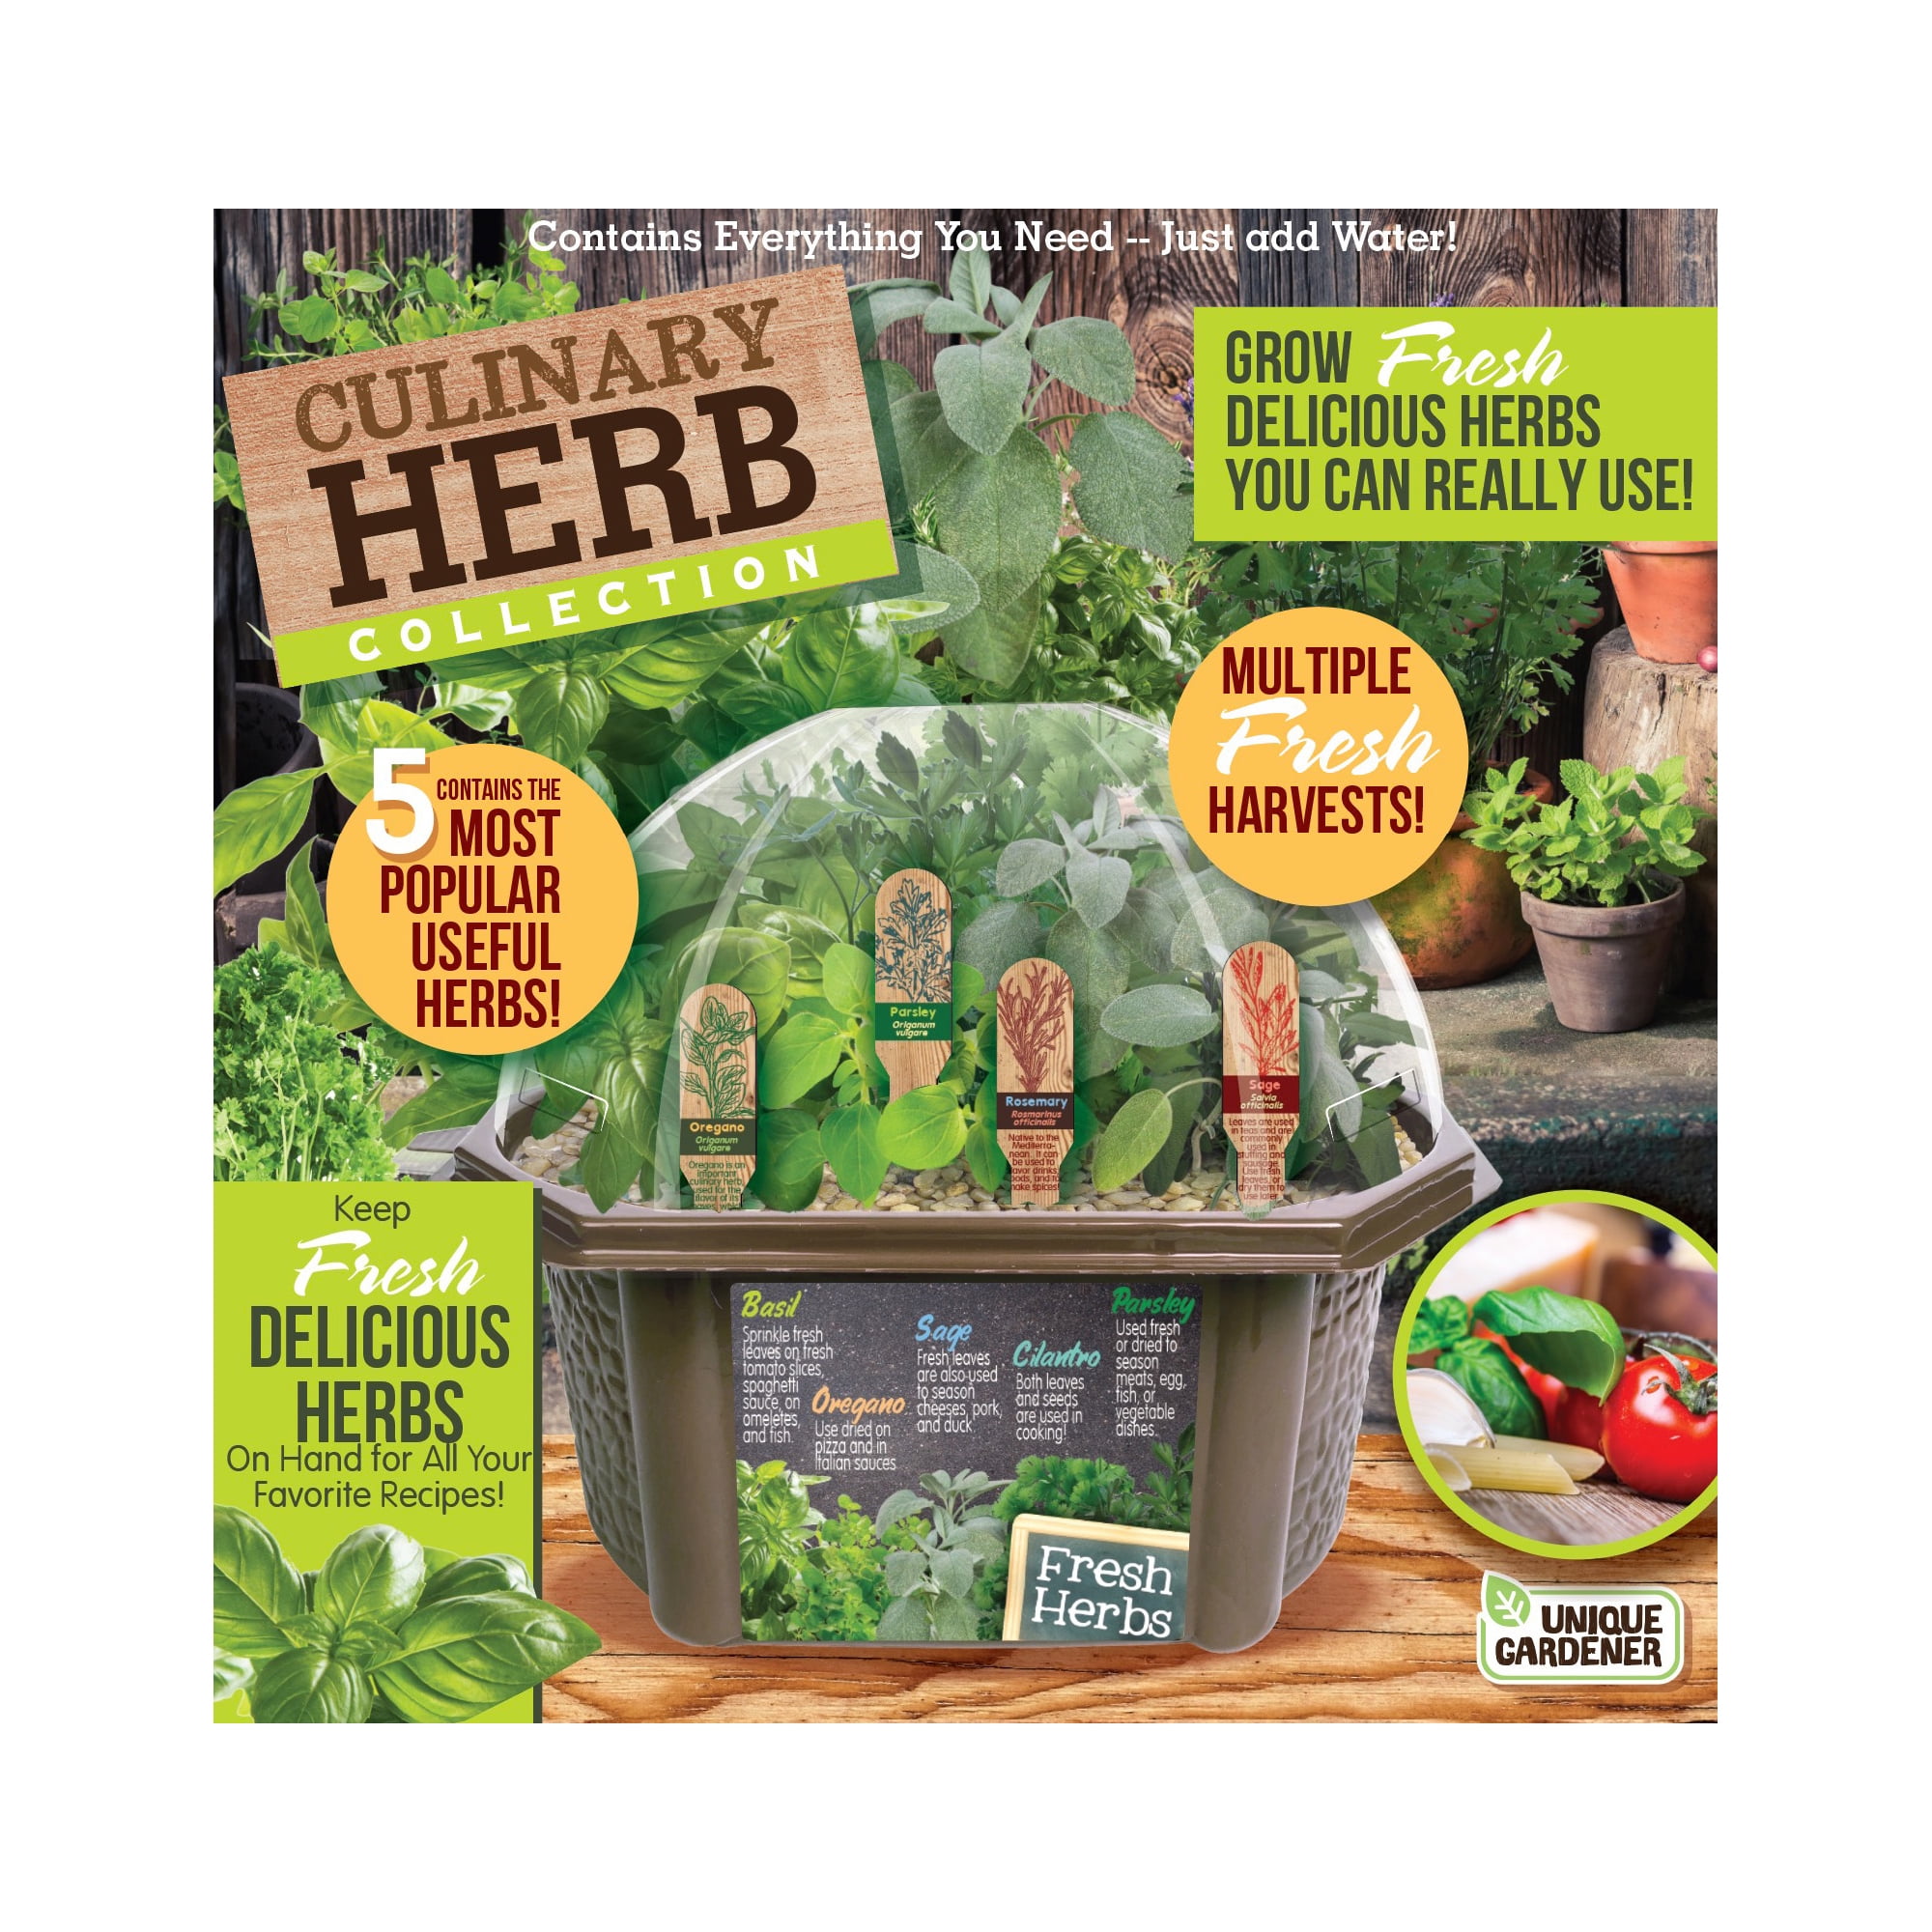 Unique Gardener - Culinary Herb Collection - Indoor Micro-Gardening Kit ...